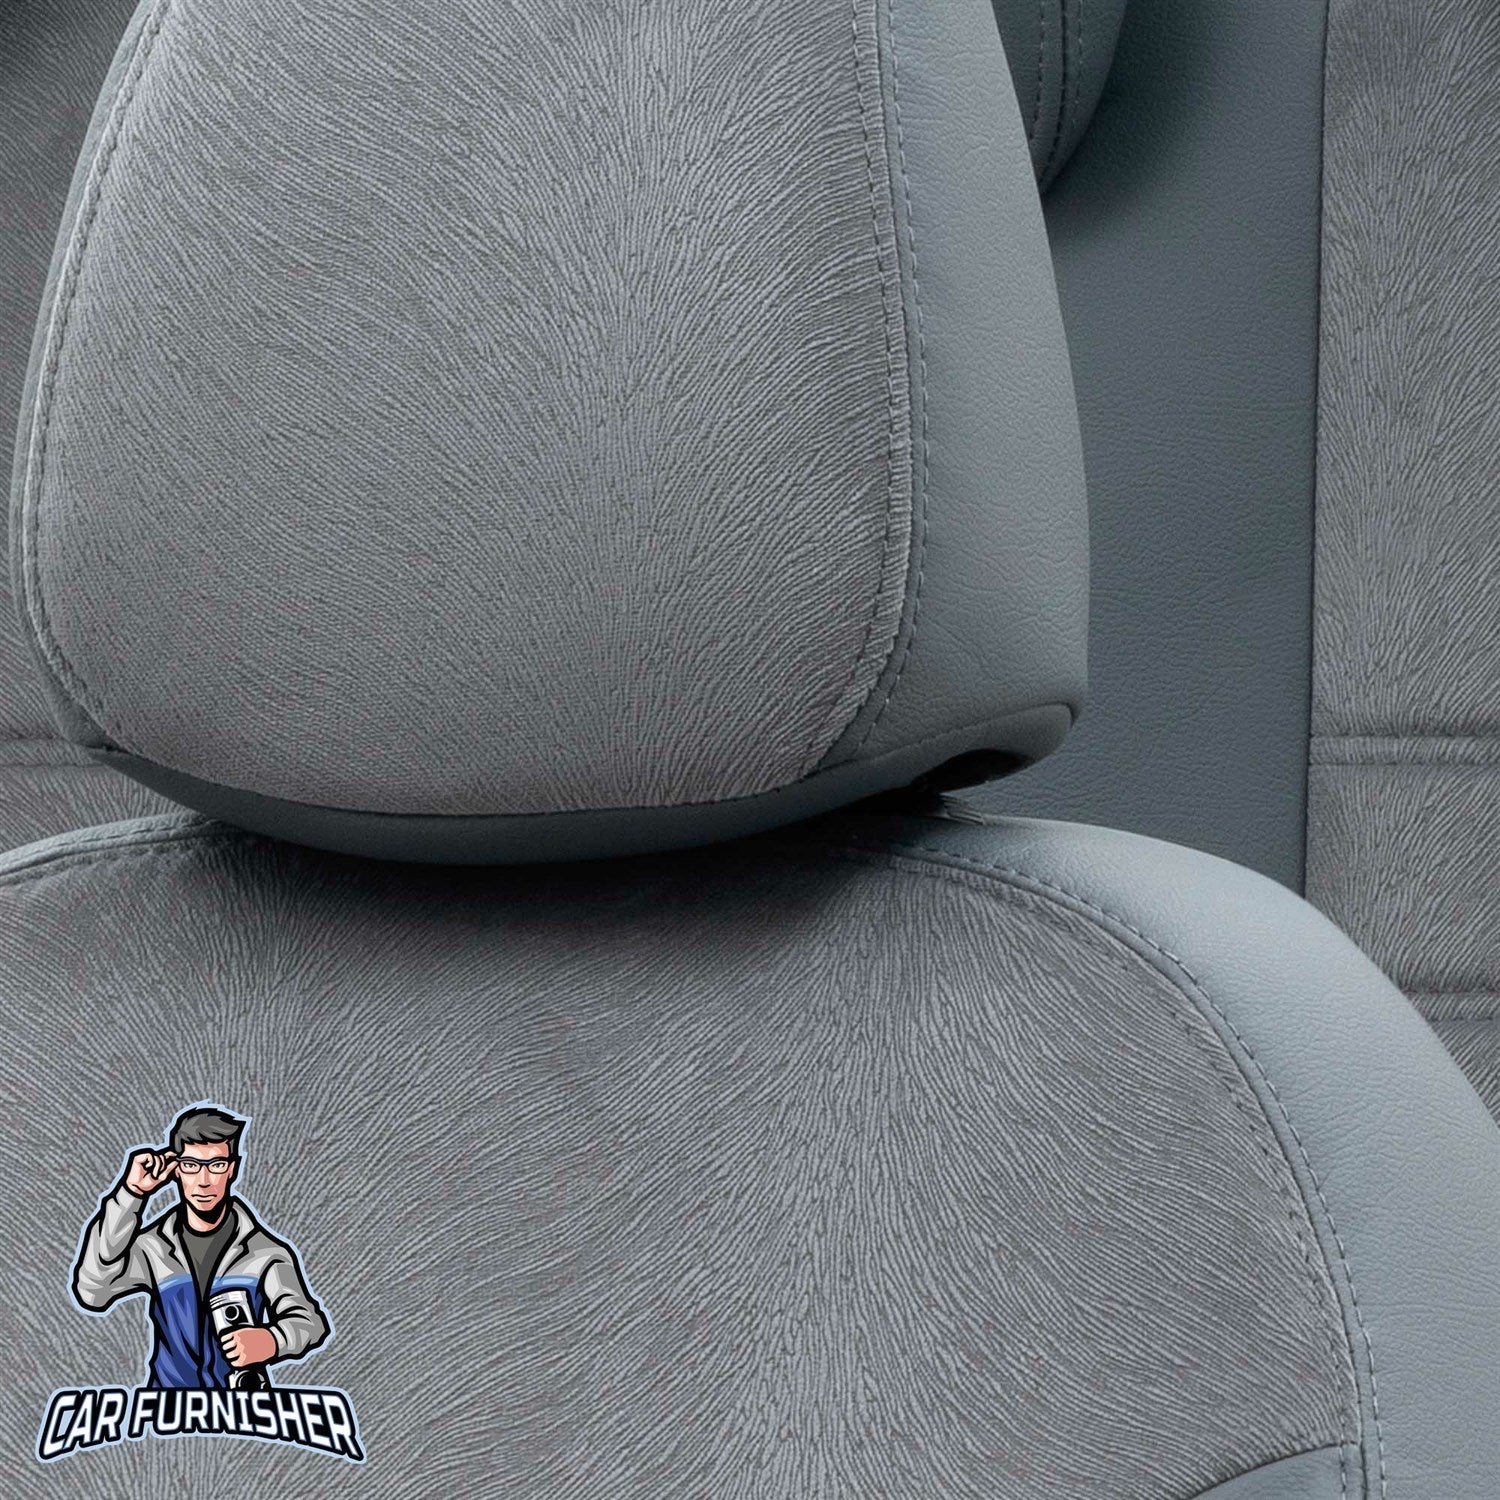 Audi A6 Car Seat Cover 1997-2018 Custom London Design Smoked Full Set (5 Seats + Handrest) Leather & Fabric